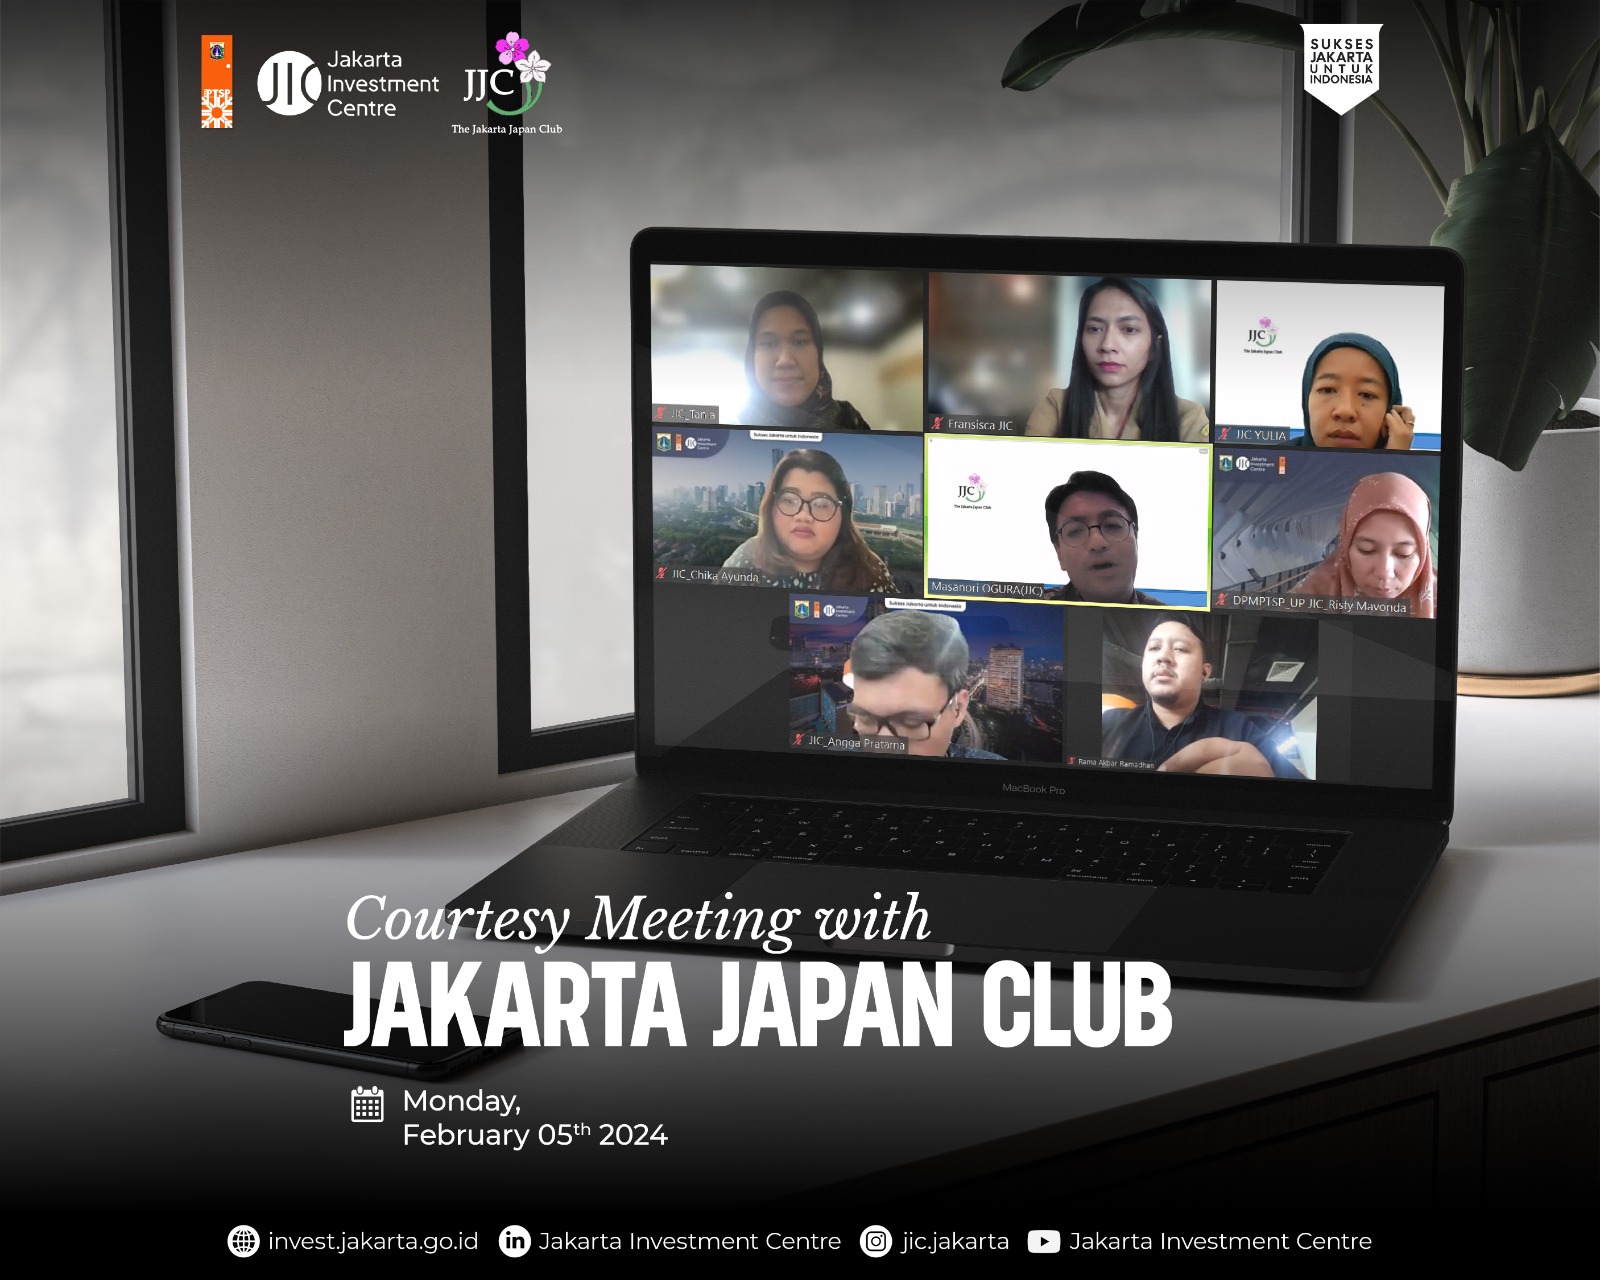 Courtesy Meeting with Jakarta Japan Club